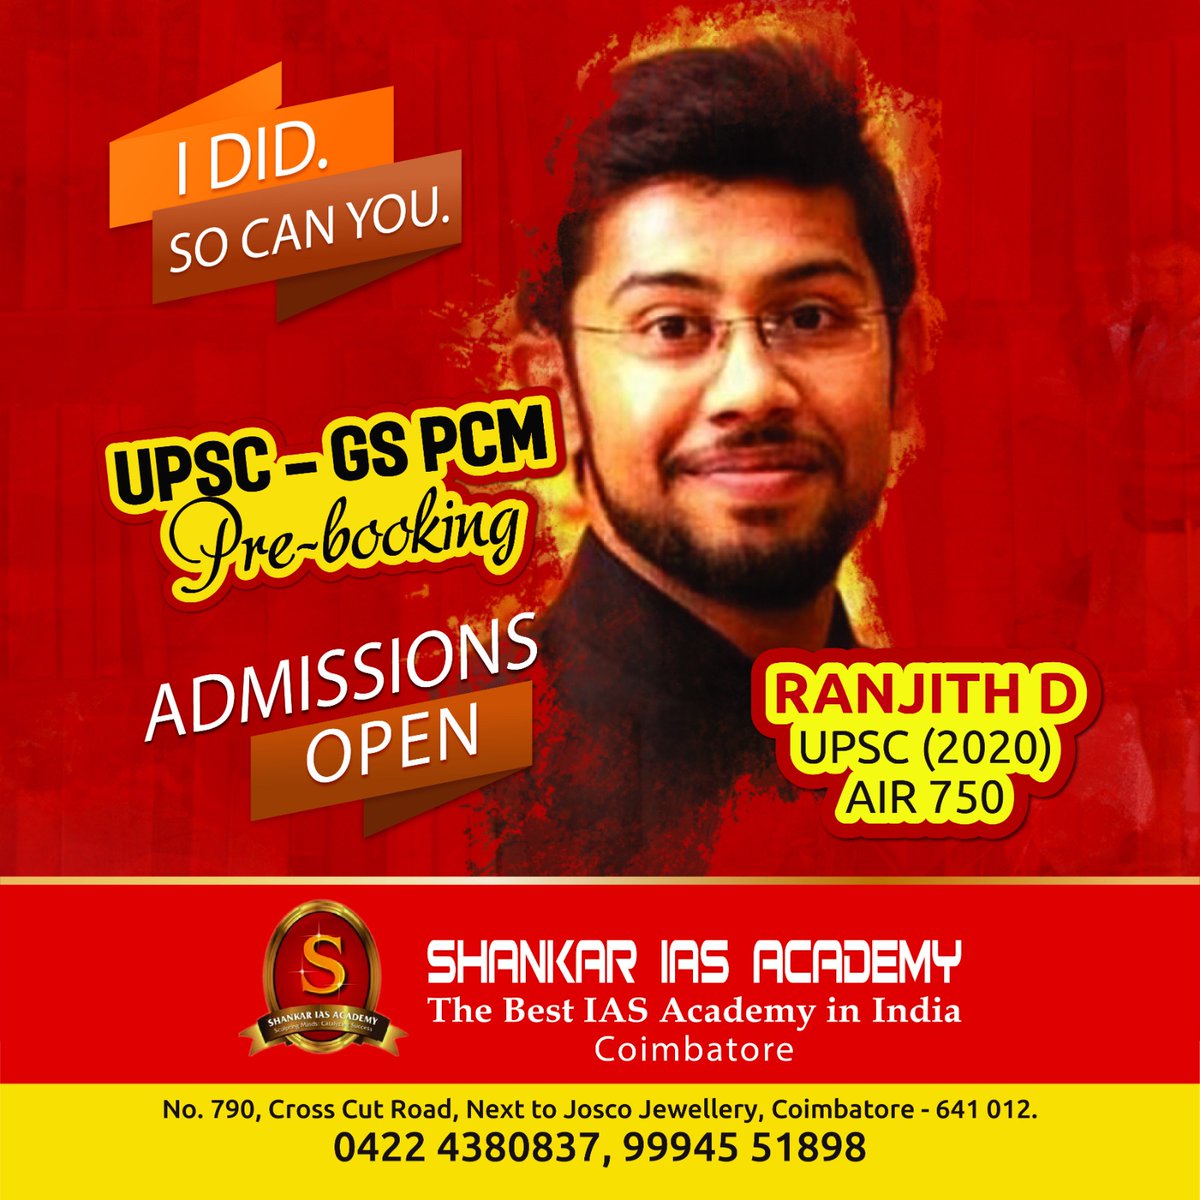 Admissions Open Shankar IAS Academy, Coimbatore

I did. So Can you.

UPSC - GS PCM pre-booking

No.790, Cross cut road, Next to Josco Jewellery, Coimbatore.
Call: 0422 4380837, 9994551898

#Coimbatore #Kerala #palakad #SIexam #tnpsc #tnpscboard #iasdreams #vacancies #job…